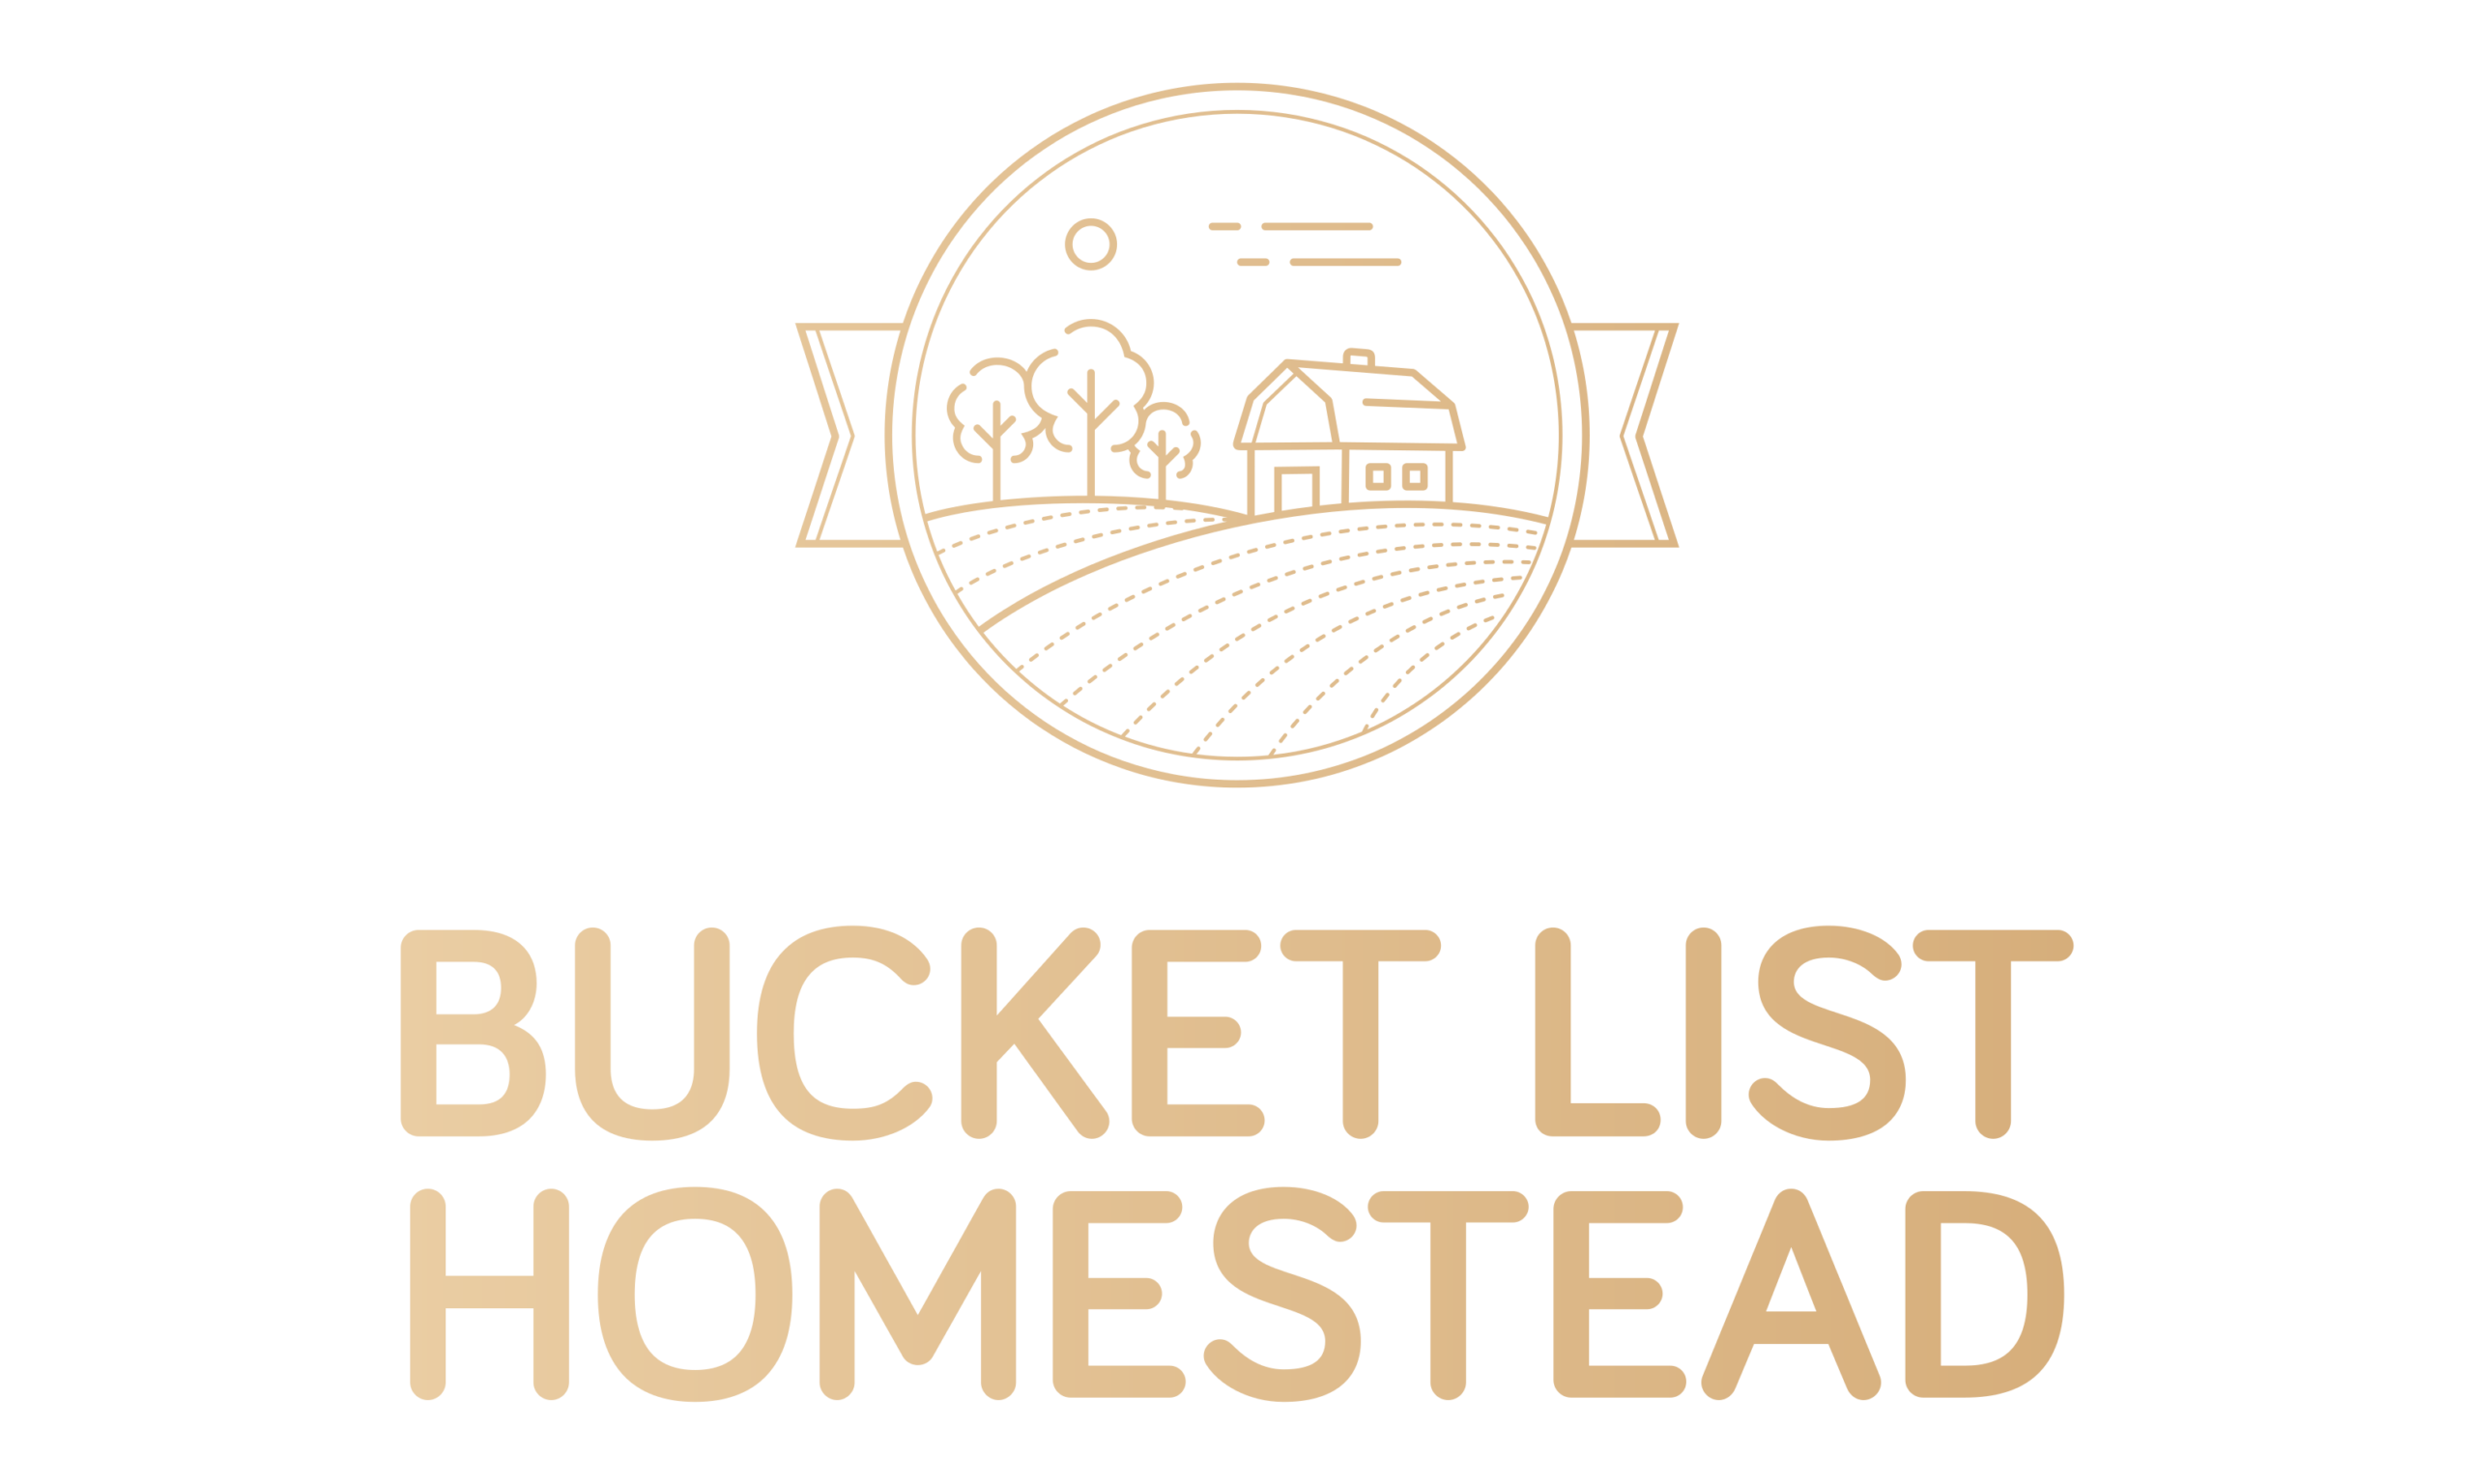 the bucket list logo